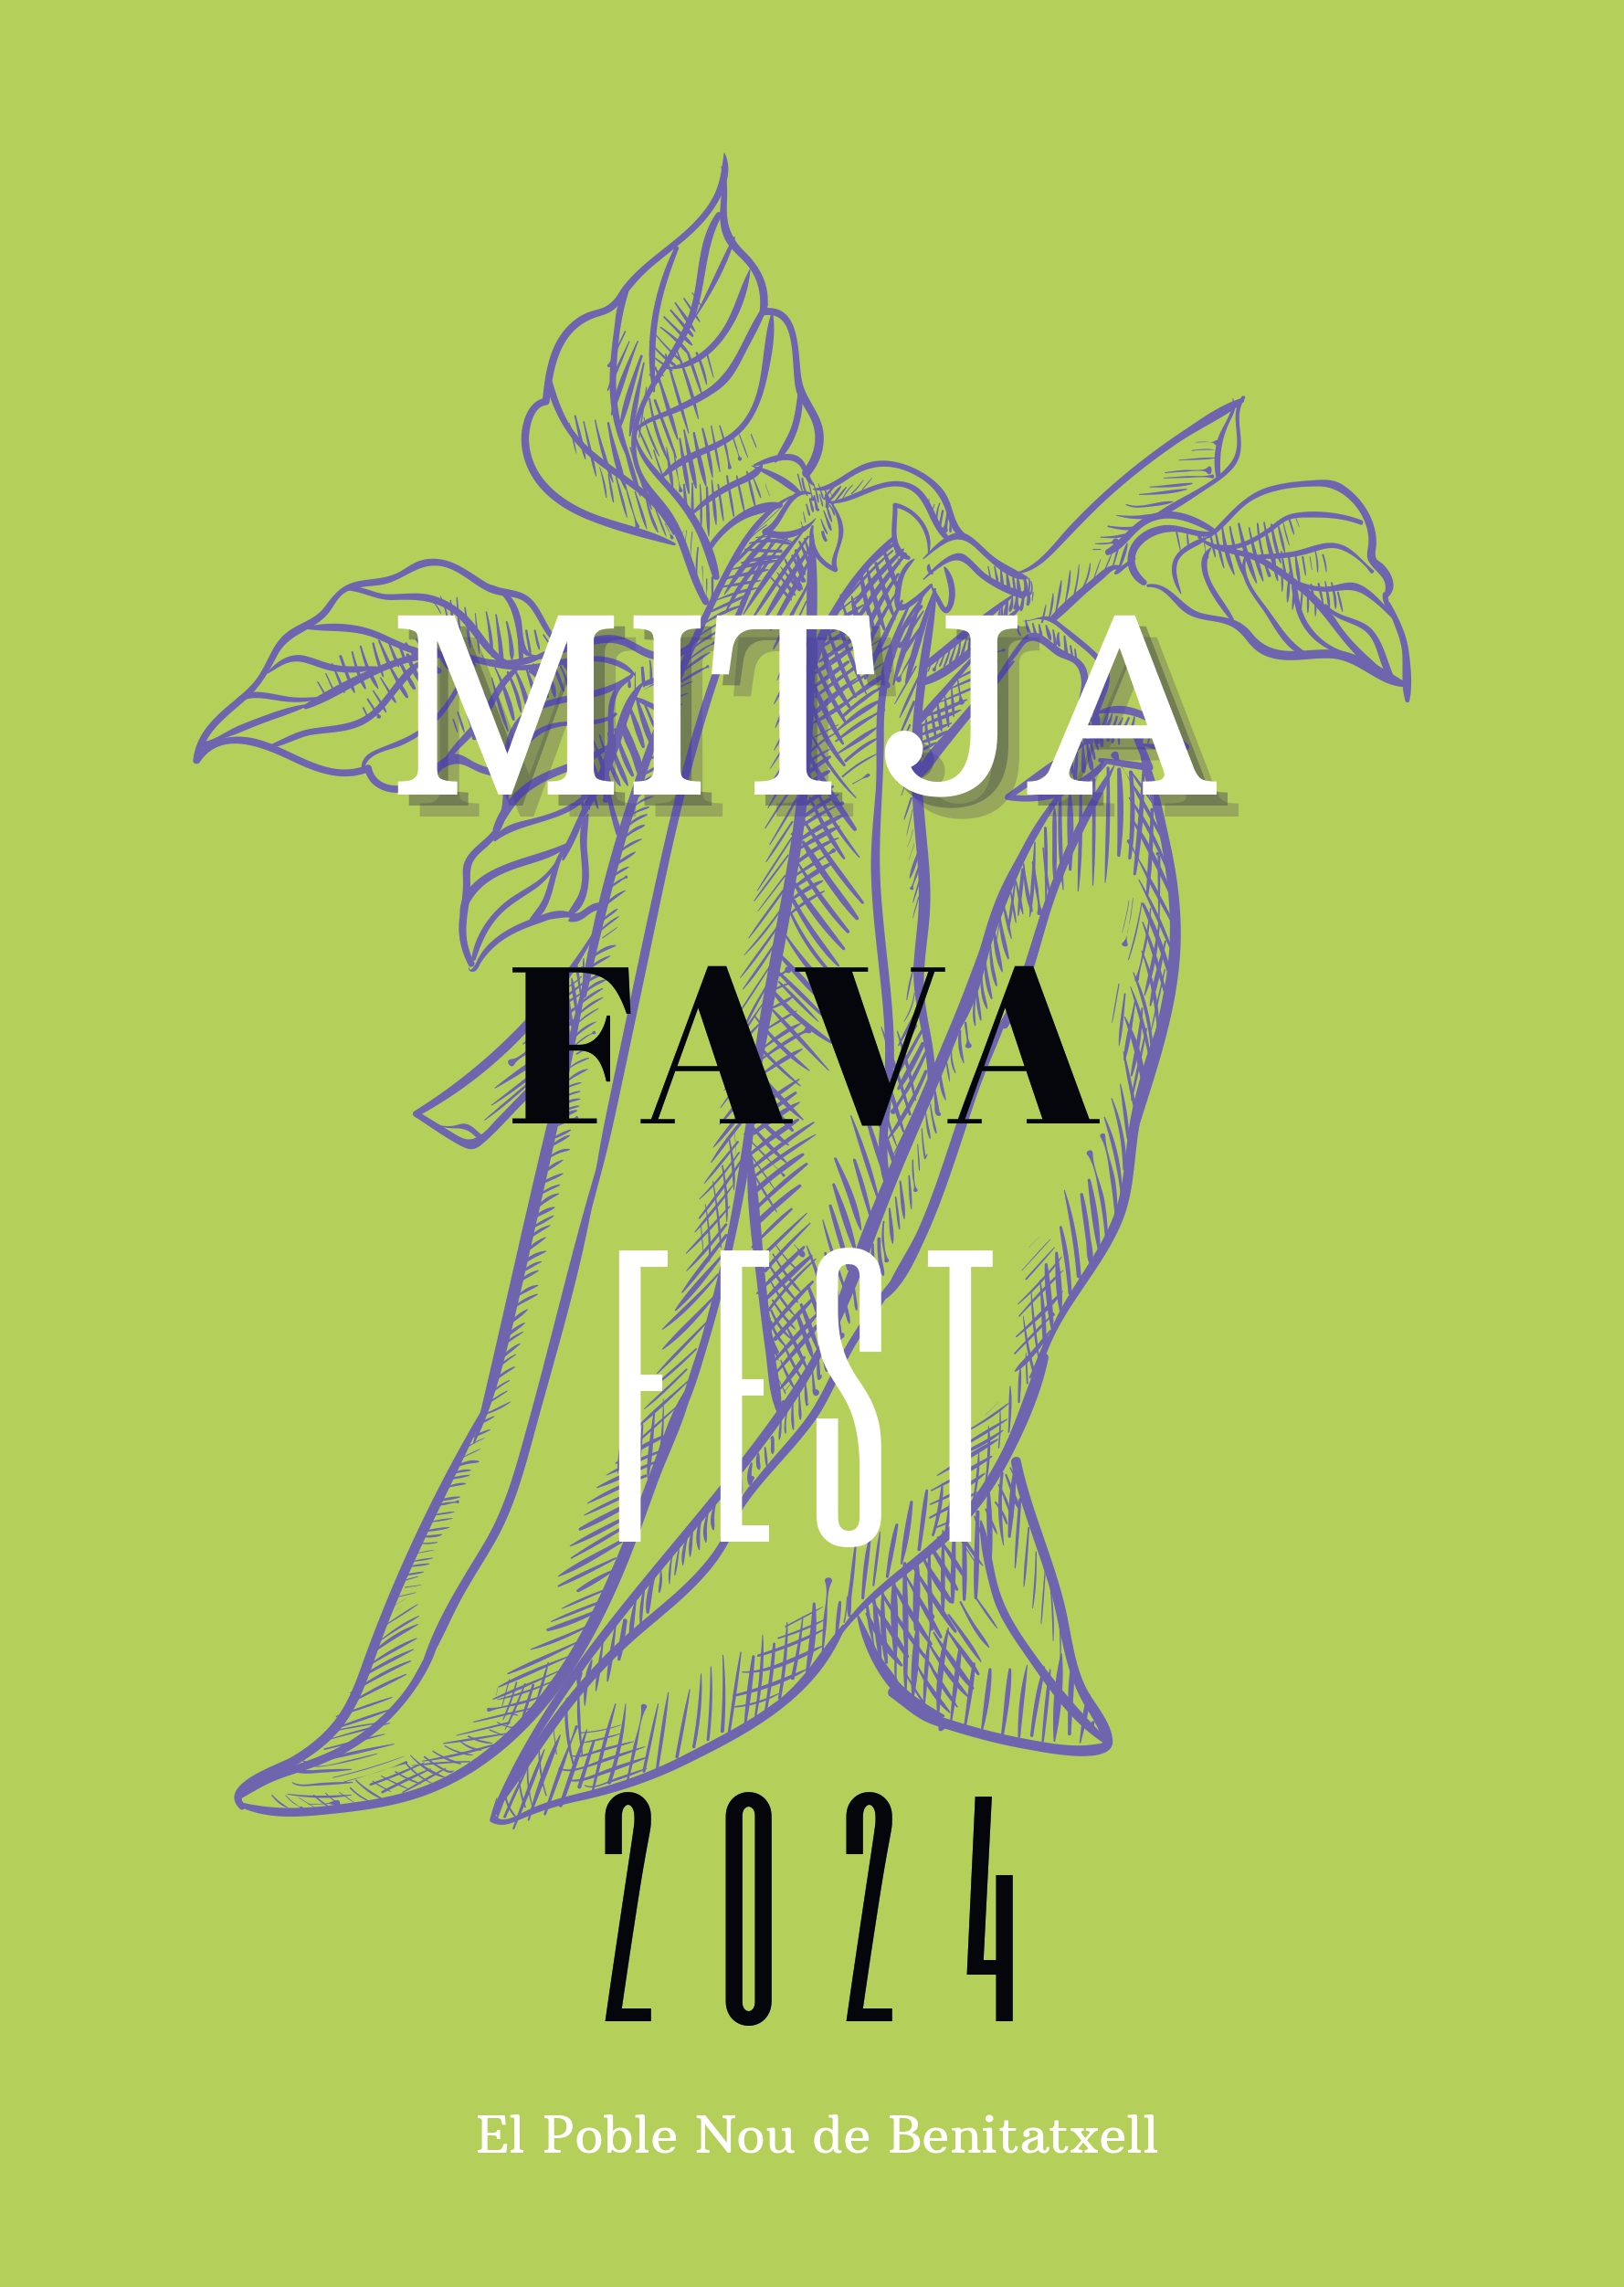 Mitjafava Fest